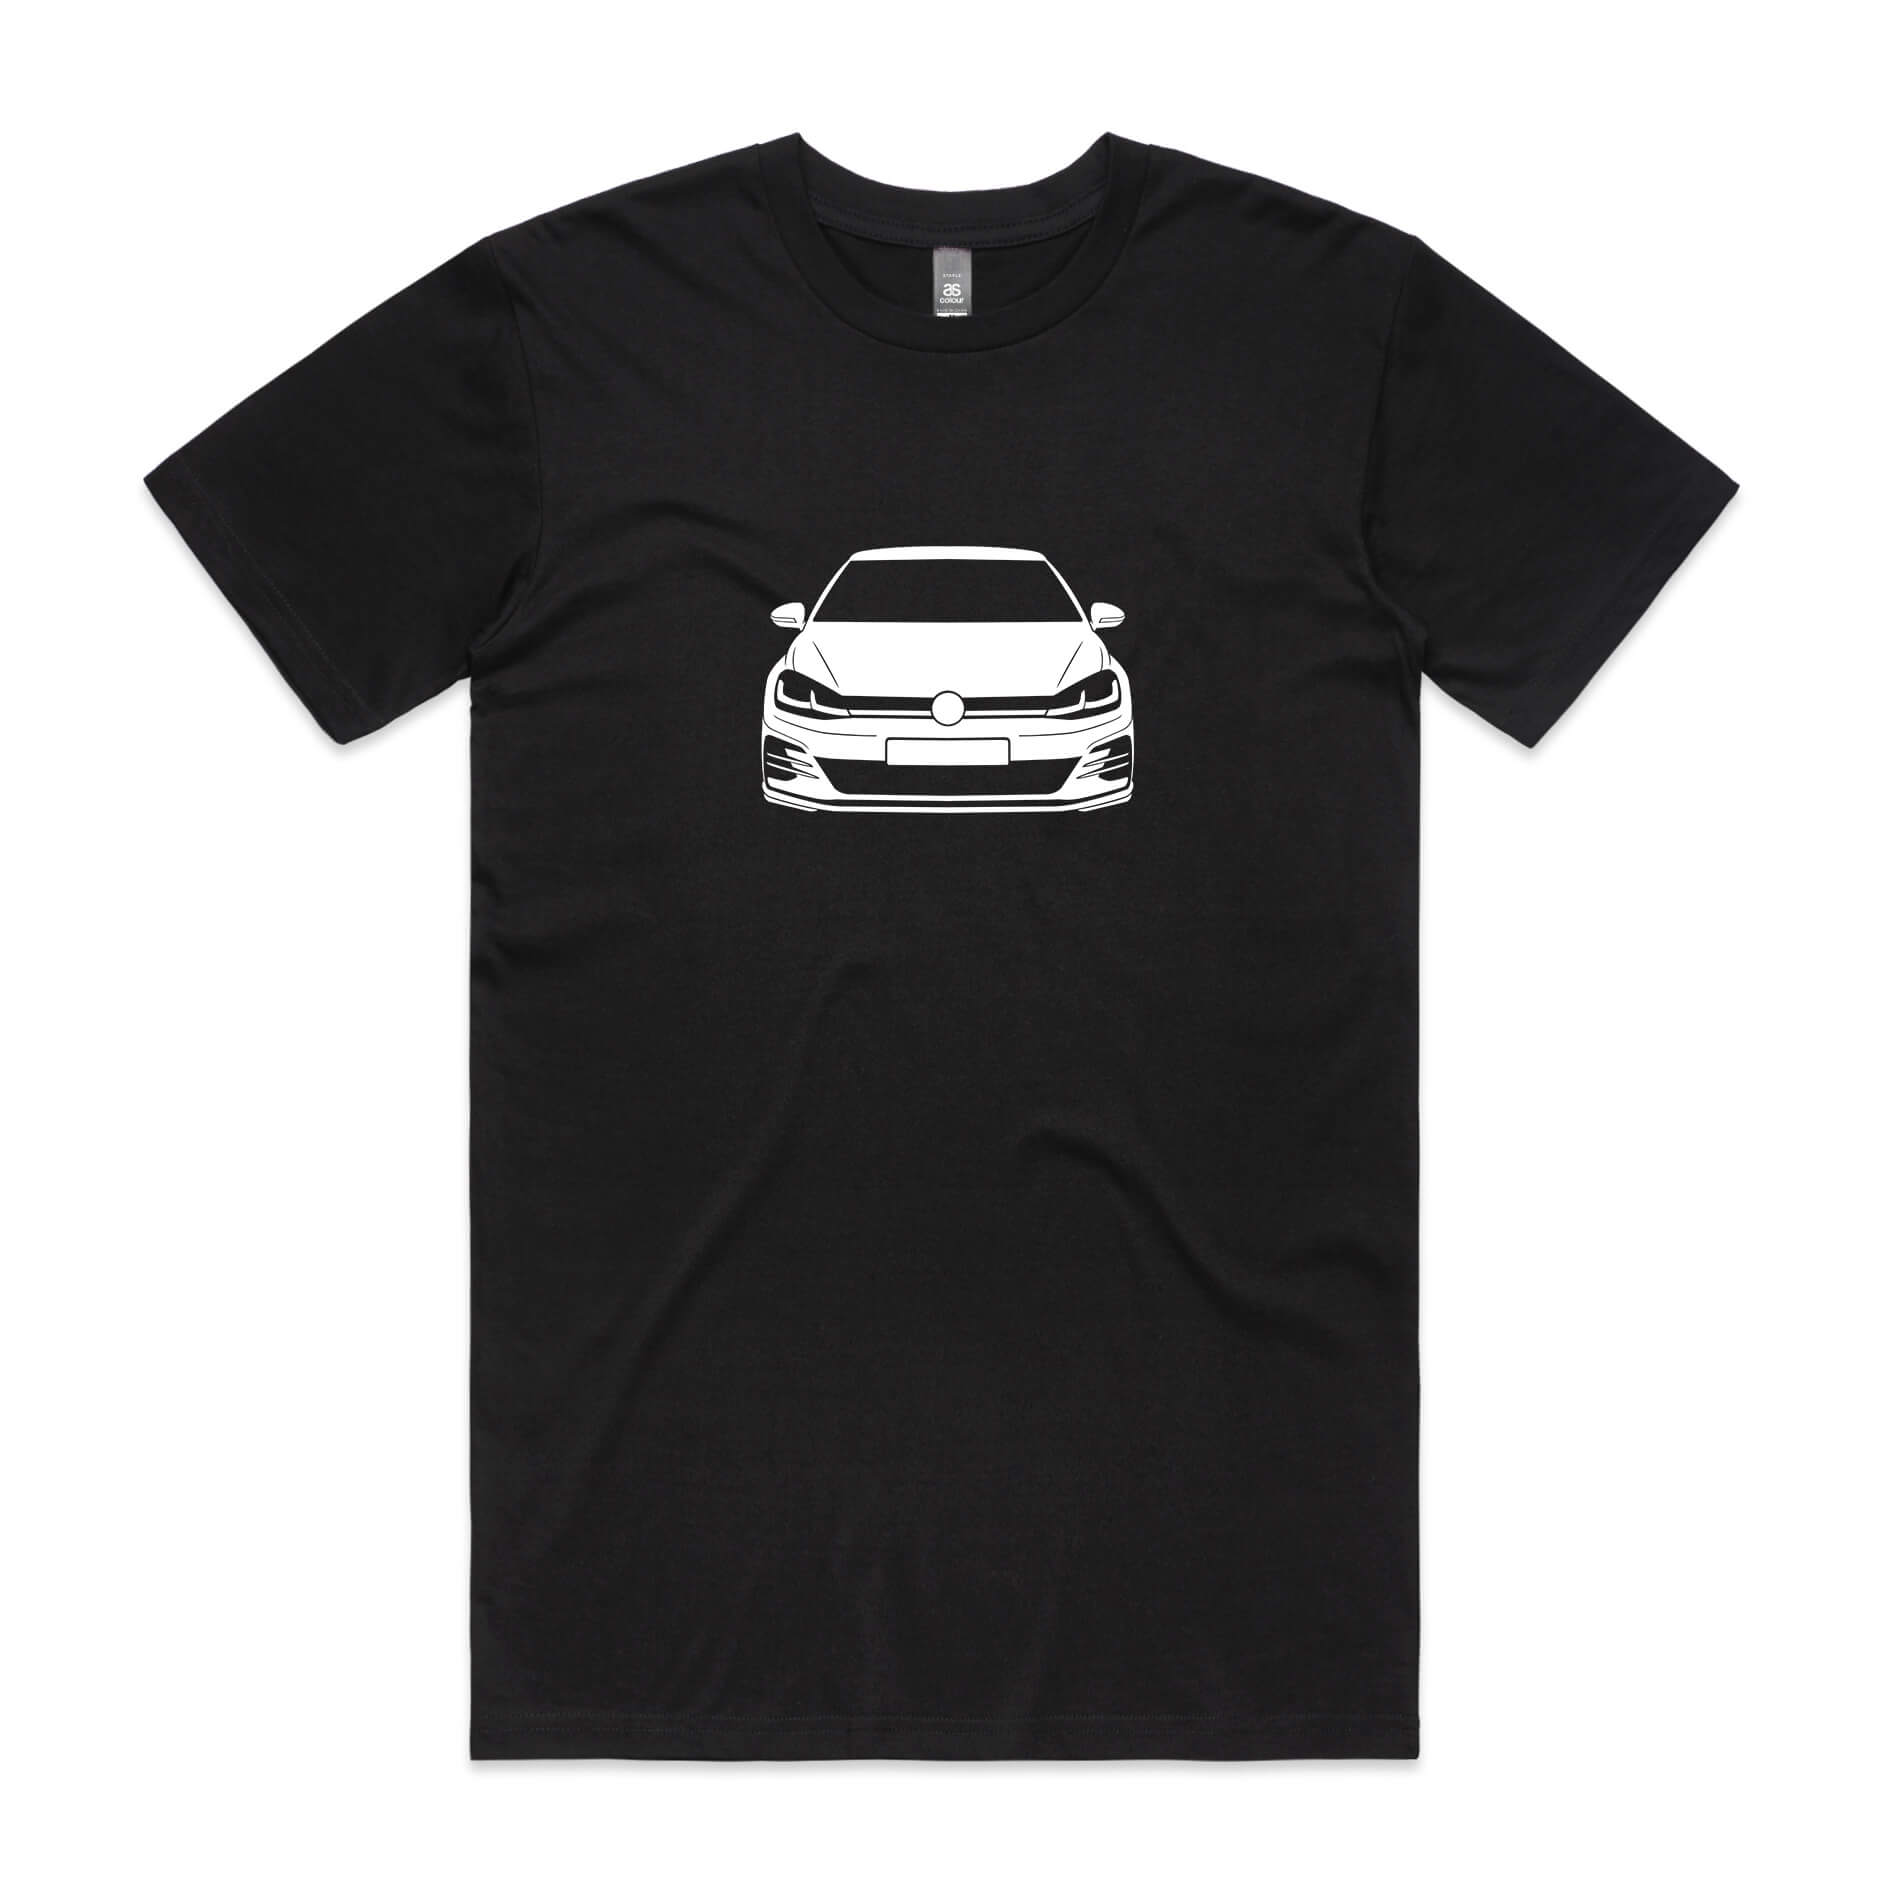 VW Golf GTi t-shirt in black